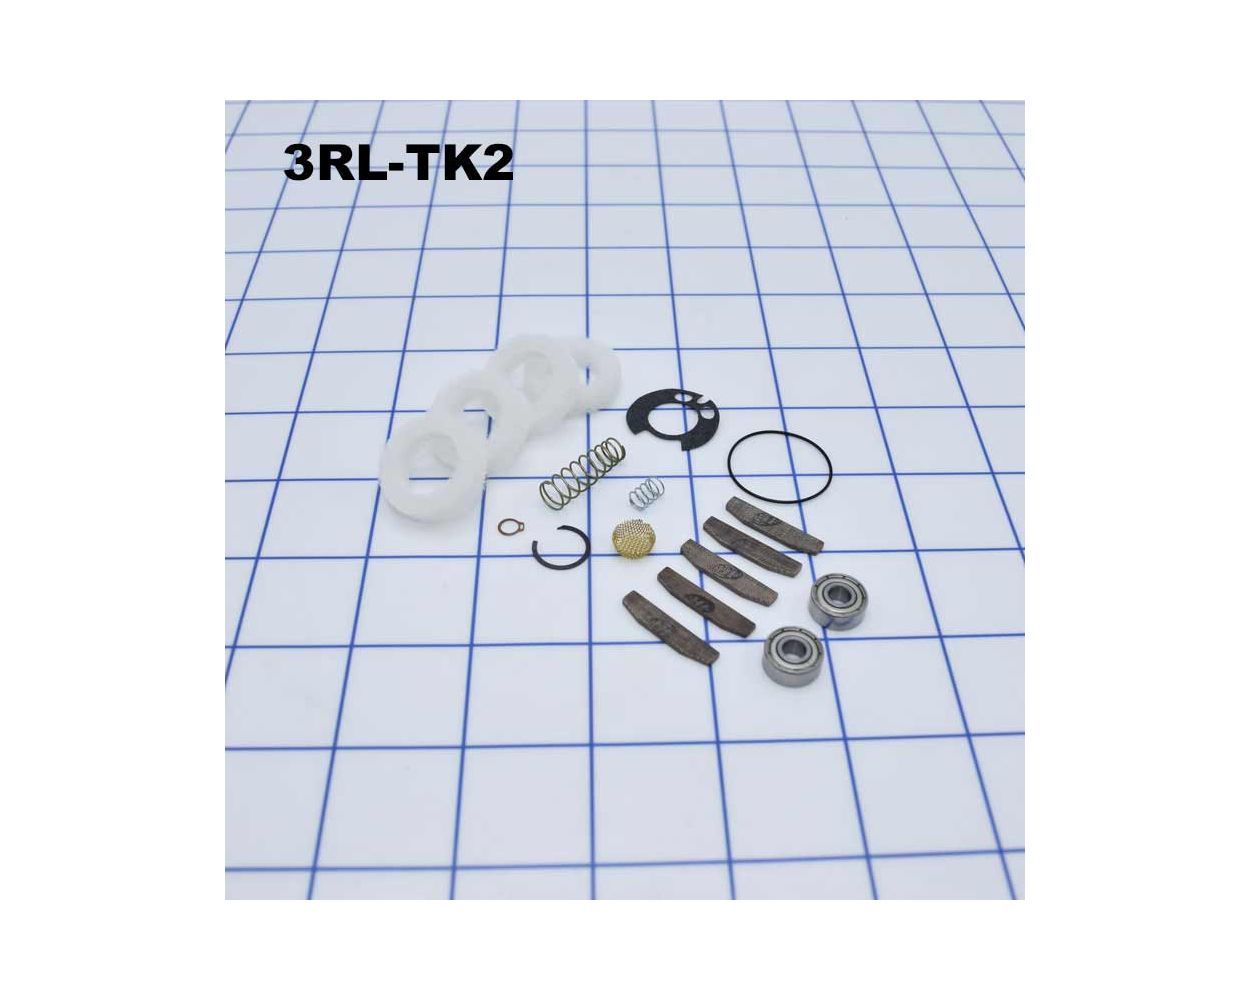 3RL-TK2 Ingersoll Rand Tune Up Kit 